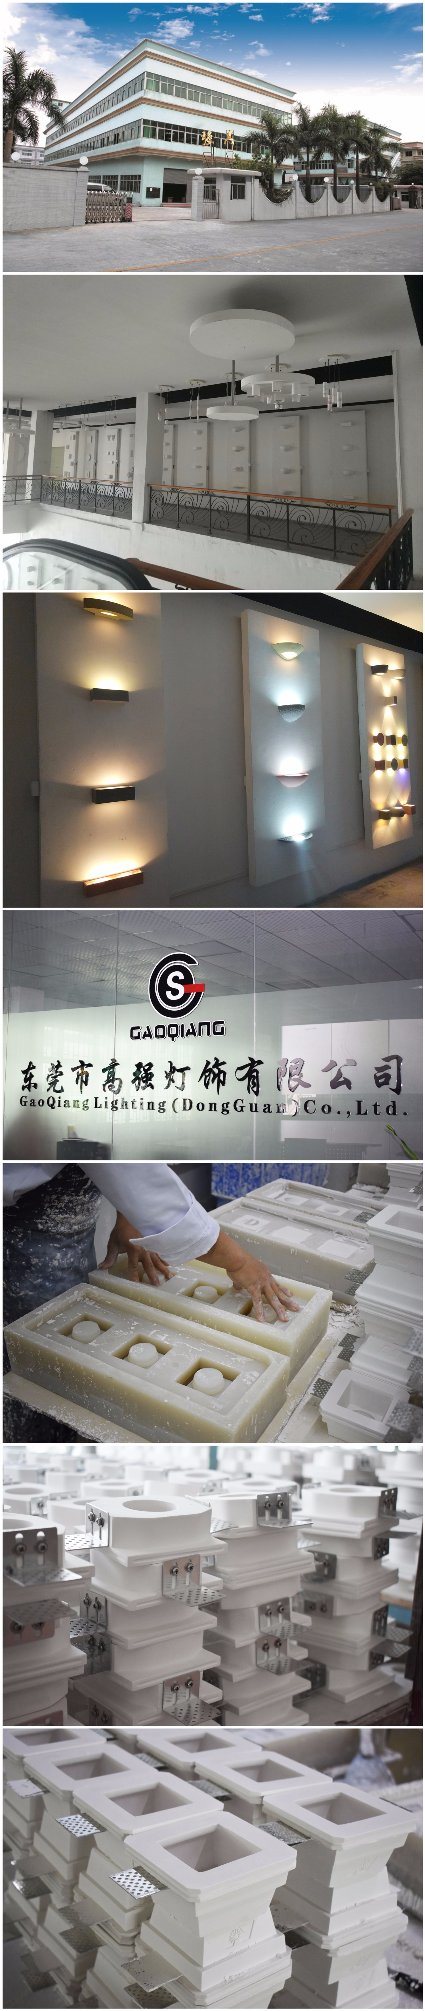 Gaoqiang White LED Lights Plaster Wall Light